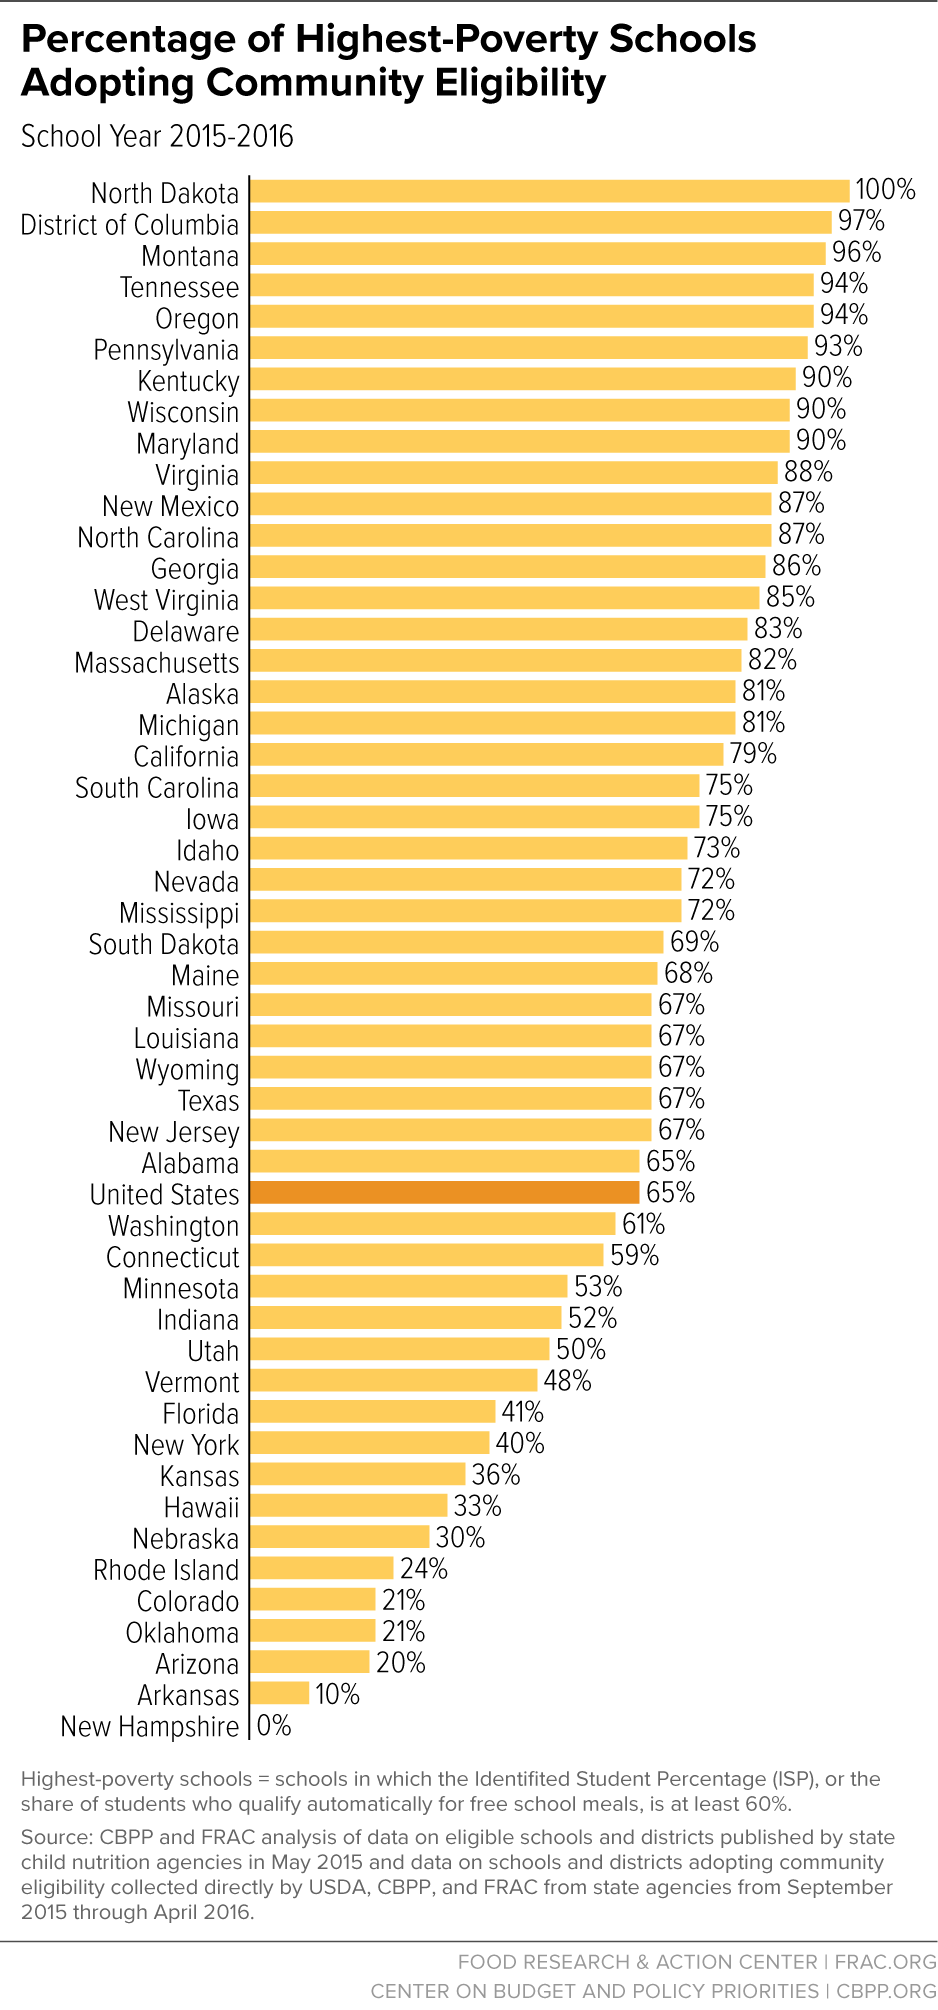 Percentage of Highest-Poverty Schools Adopting Community Eligibility